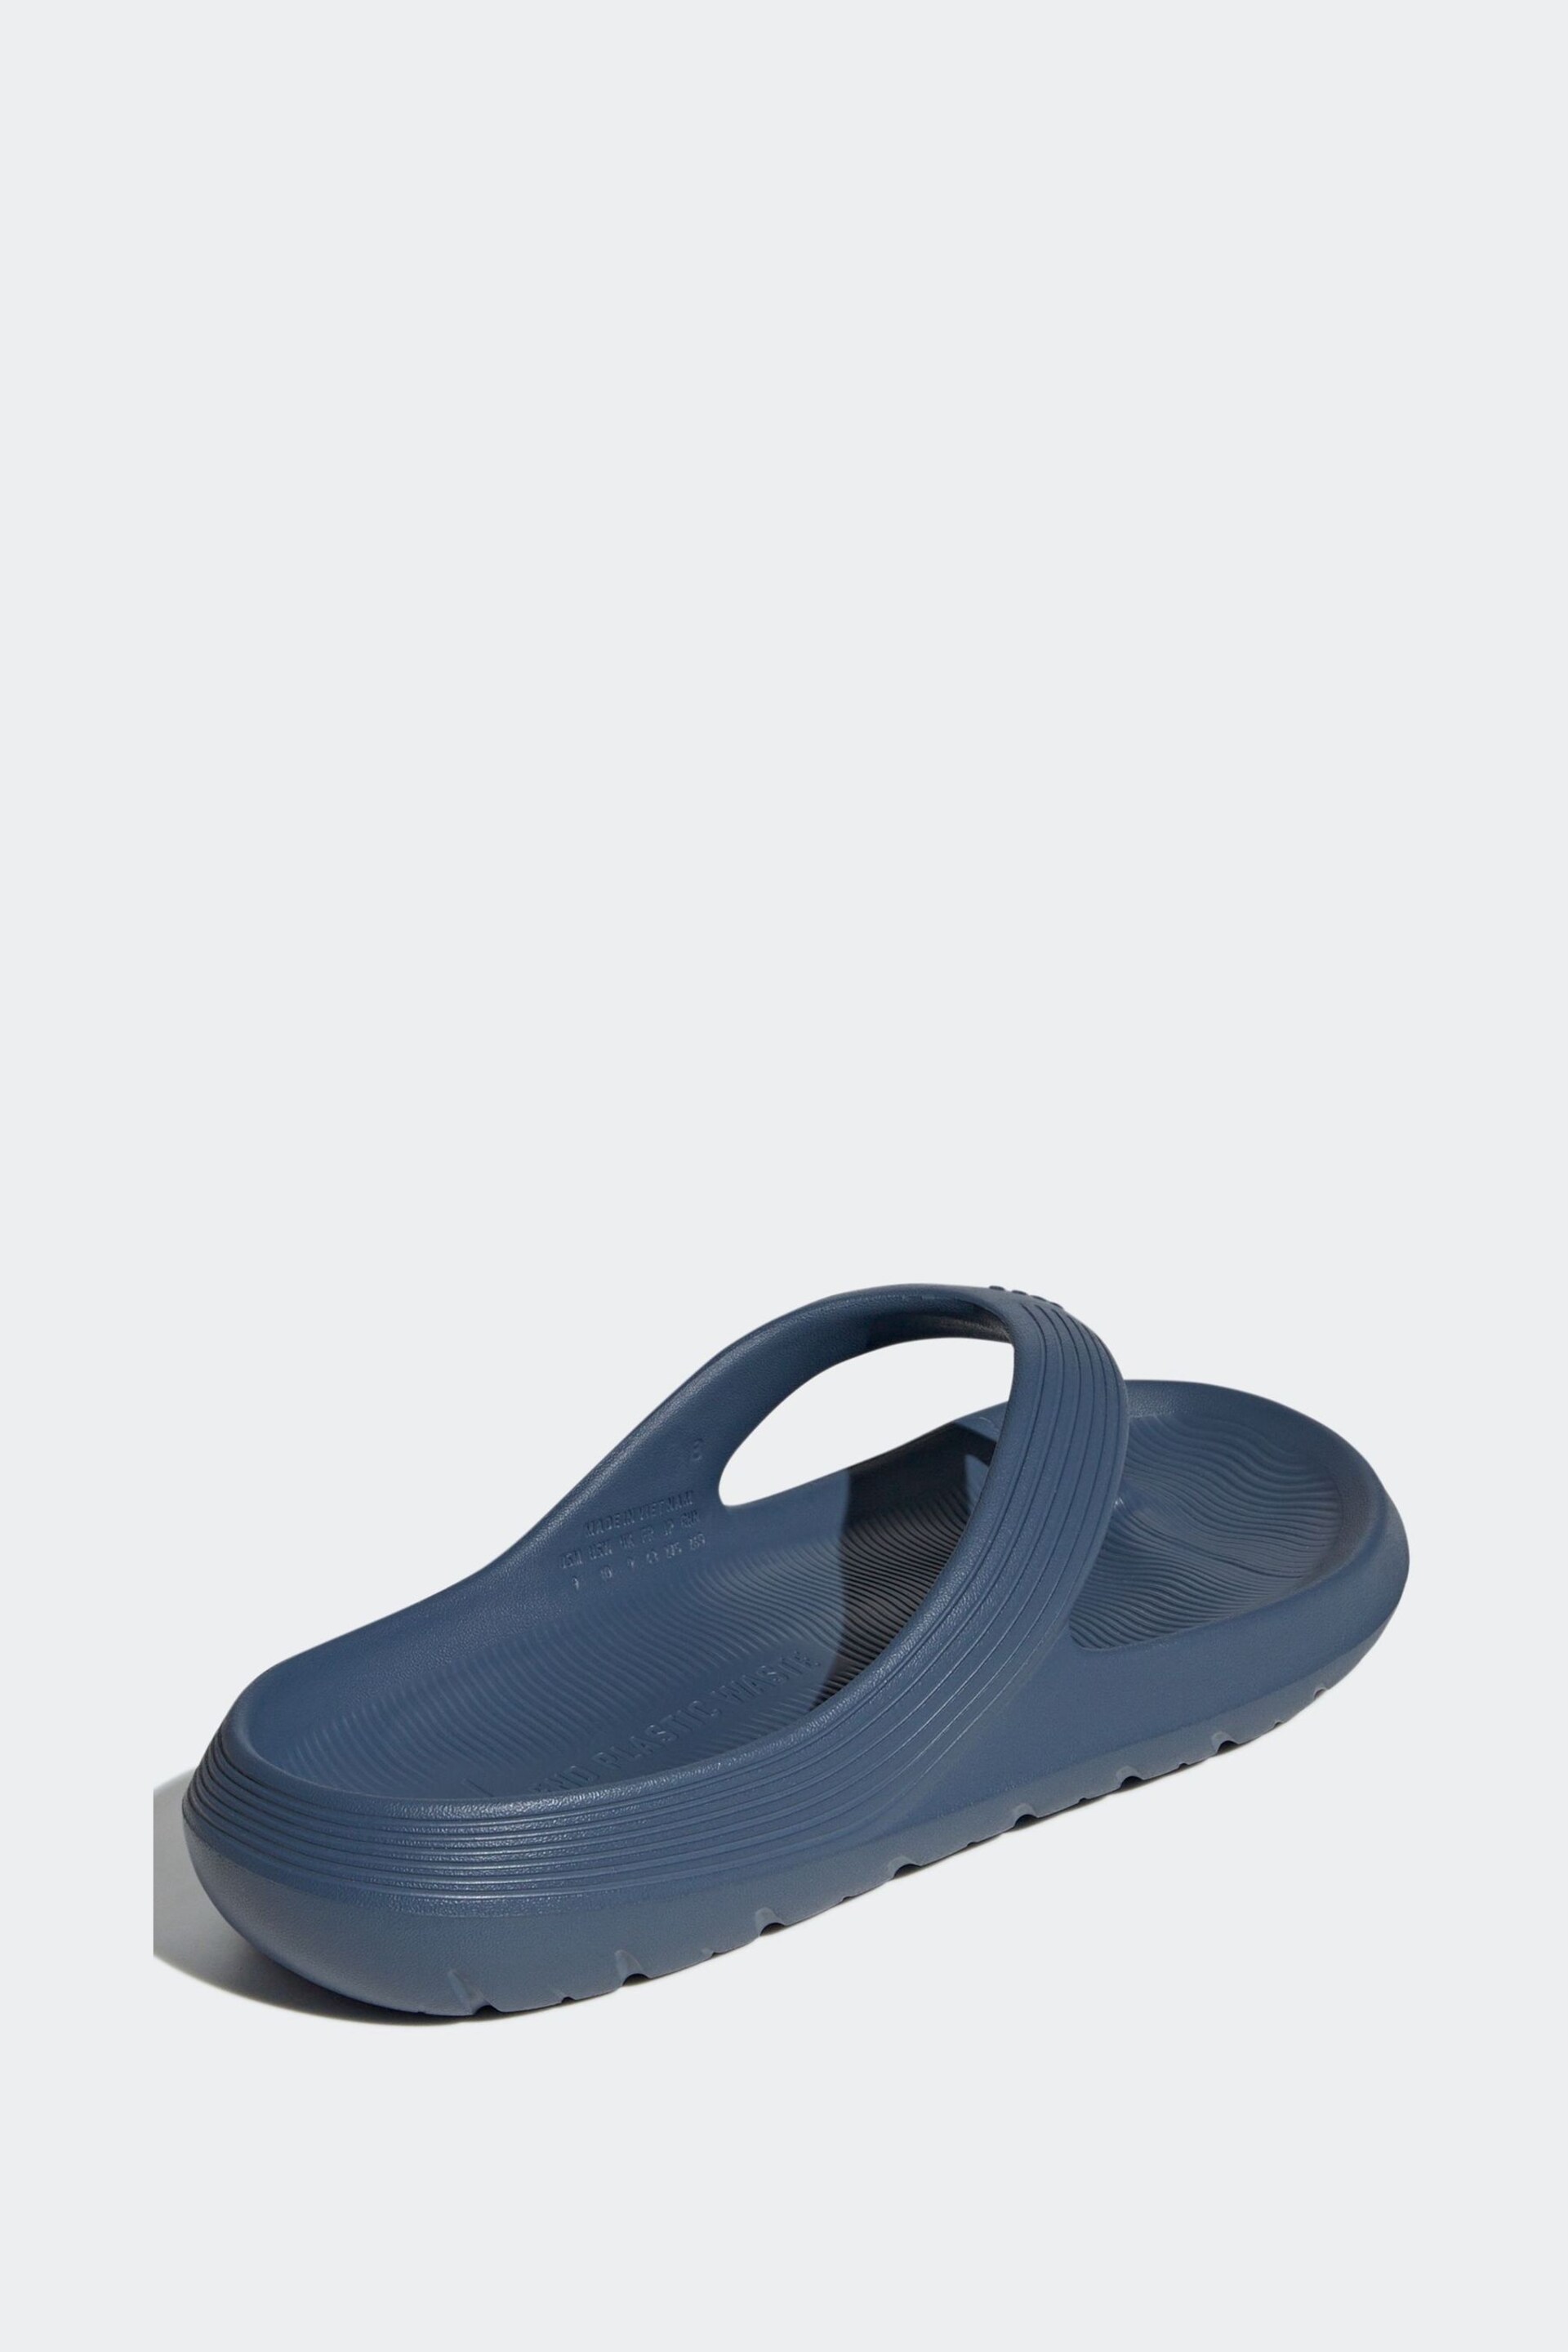 adidas Blue Sportswear Adicane Flip Flops - Image 4 of 8